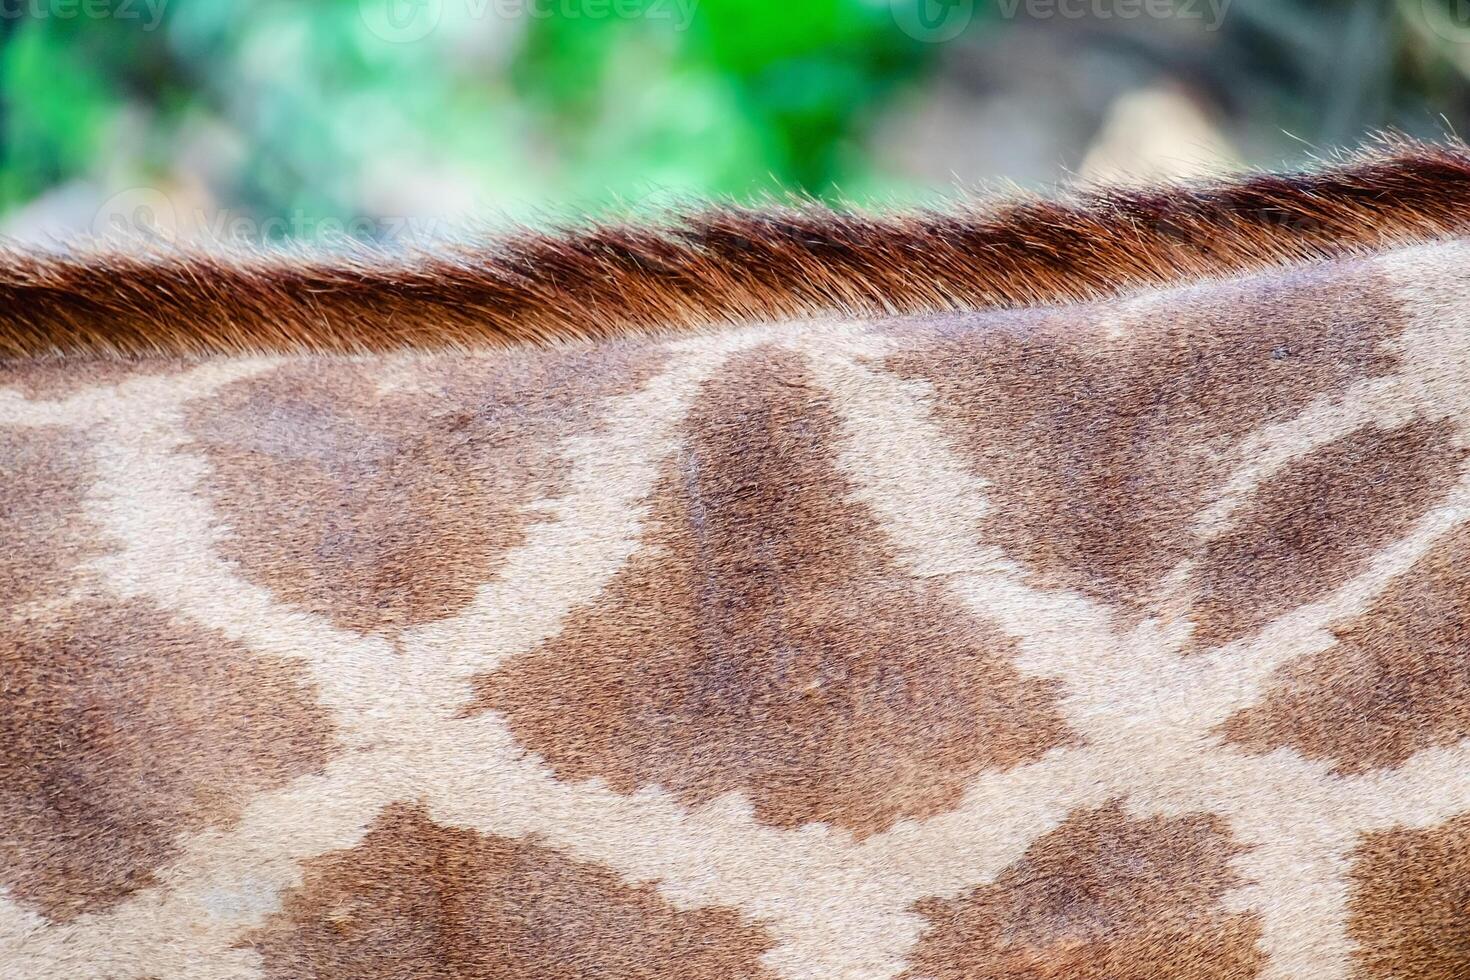 Skin of Giraffe with the spotting pattern photo